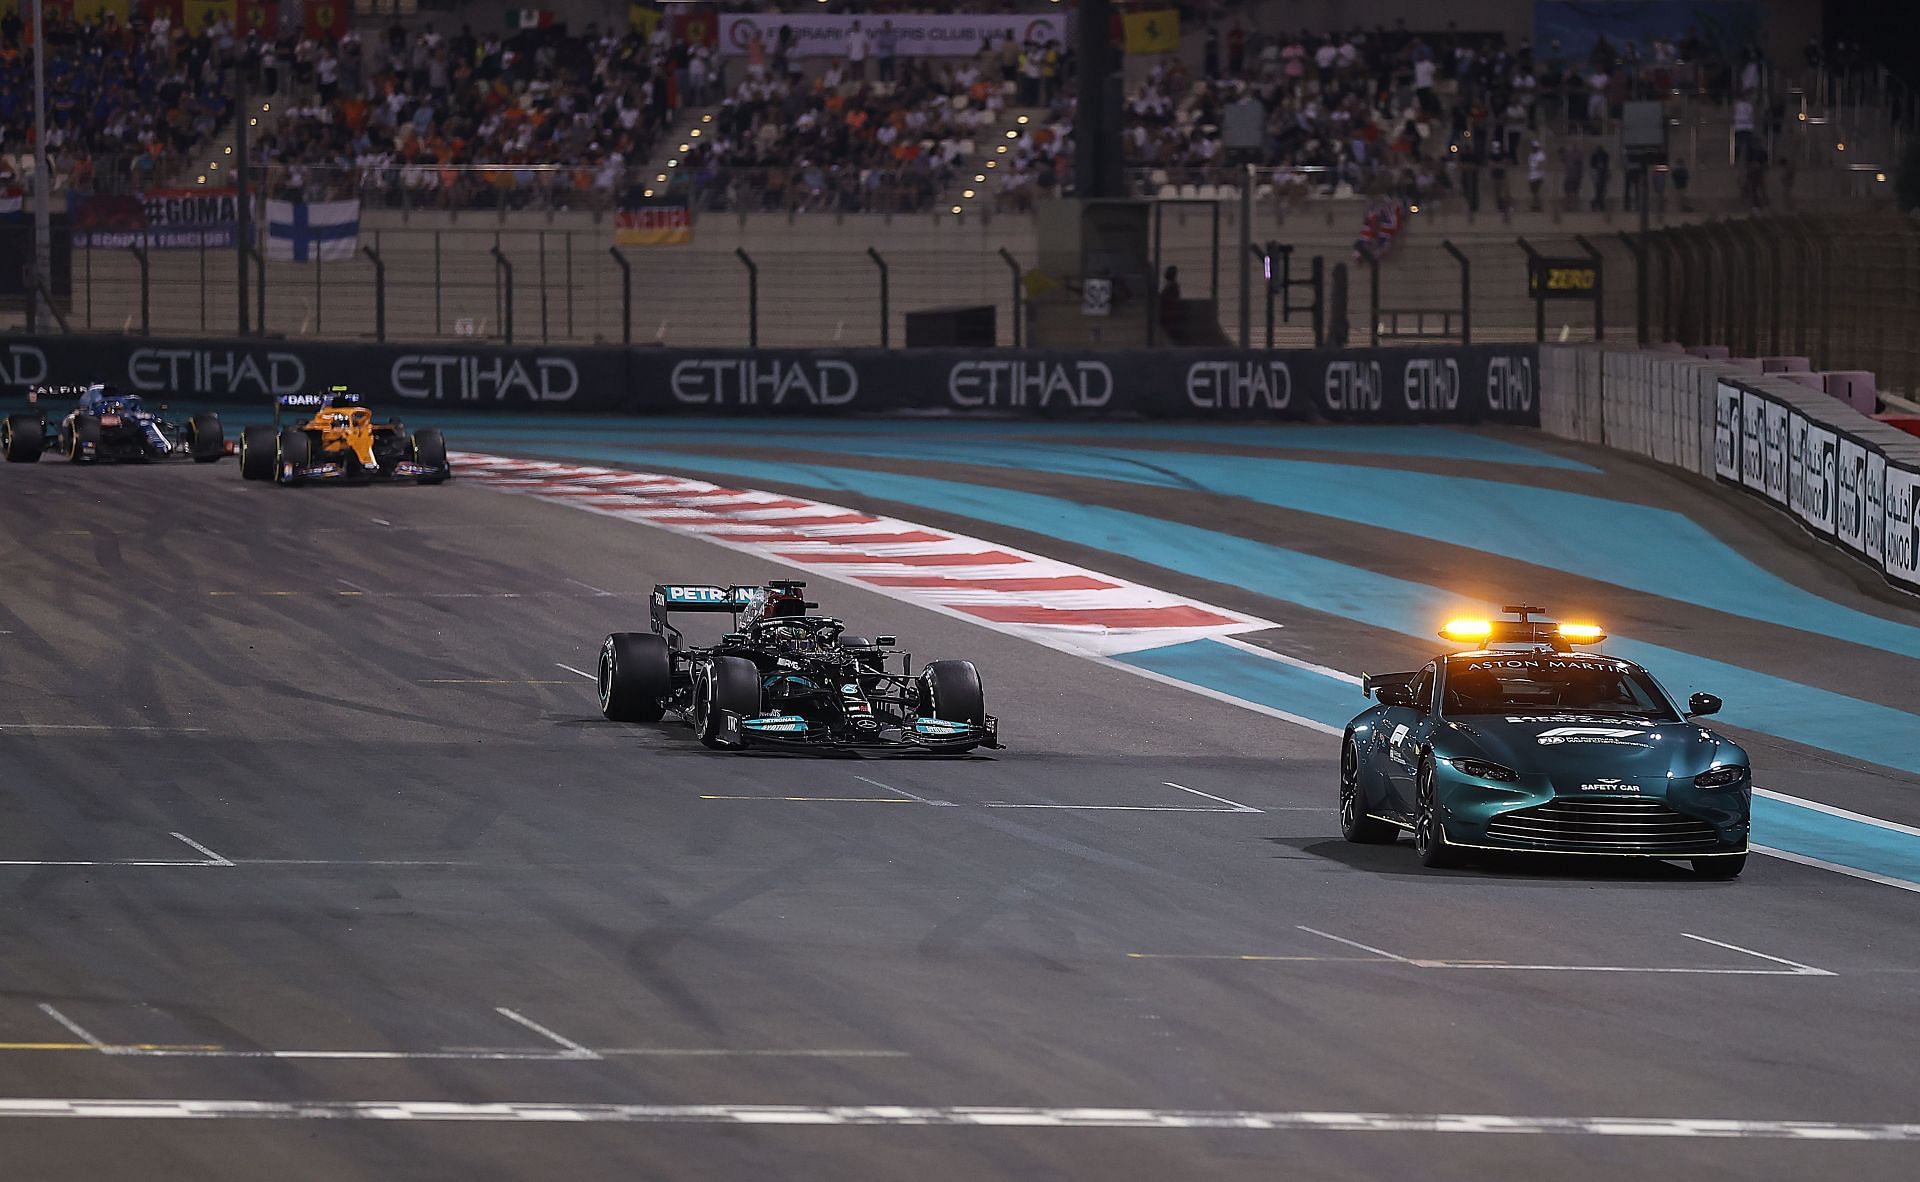 The FIA Safety Car leads Lewis Hamilton - #44 Mercedes W12 on lap 55 of the Abu Dhabi Grand Prix